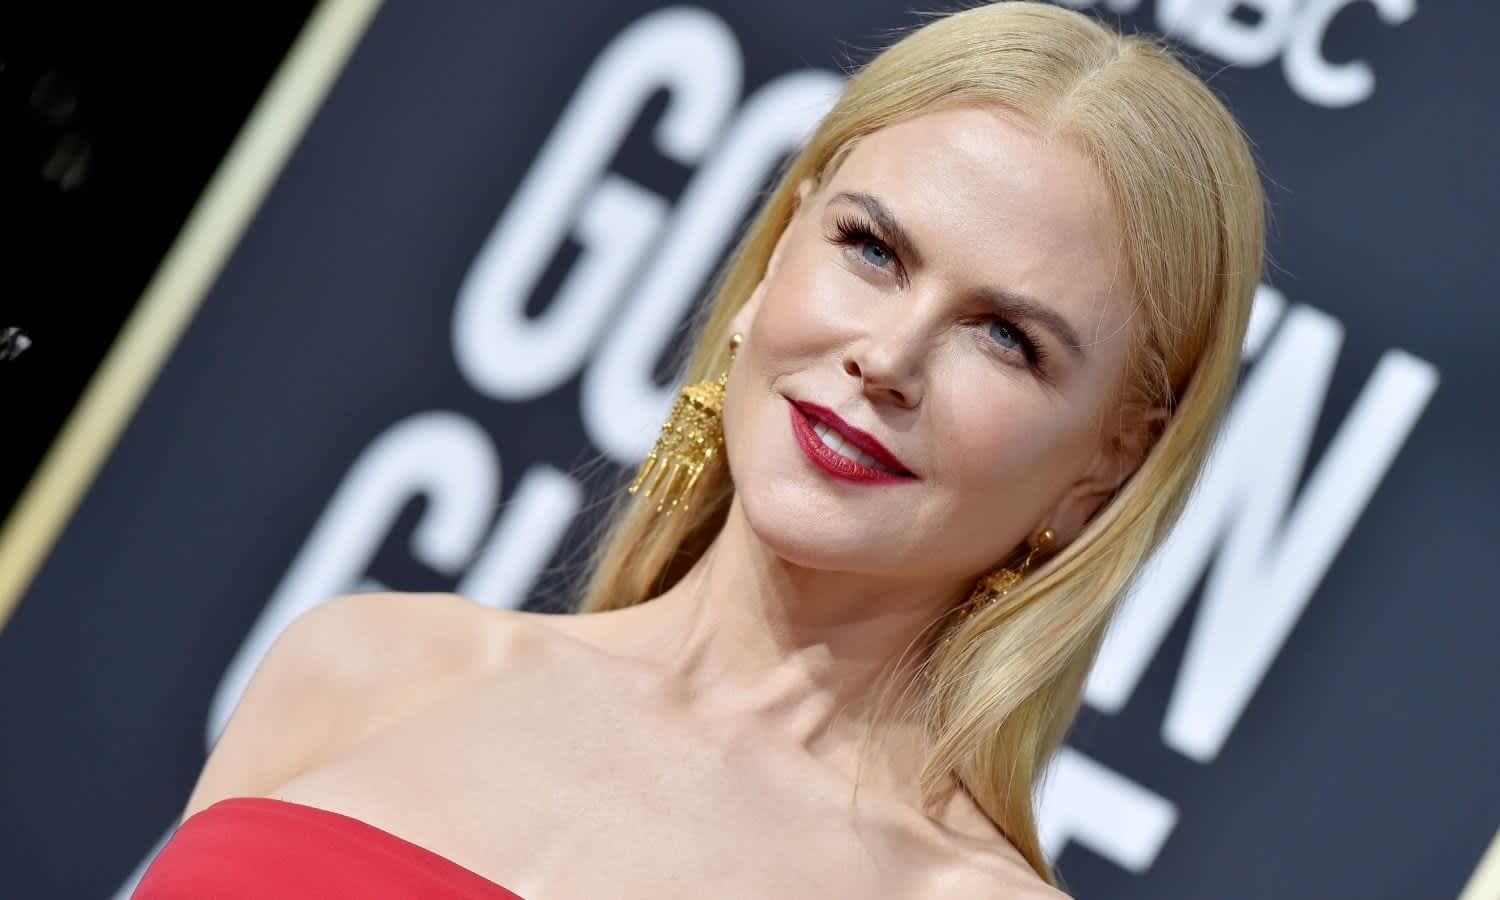 Golden Globes 2021: The secrets behind Nicole Kidman's Louis